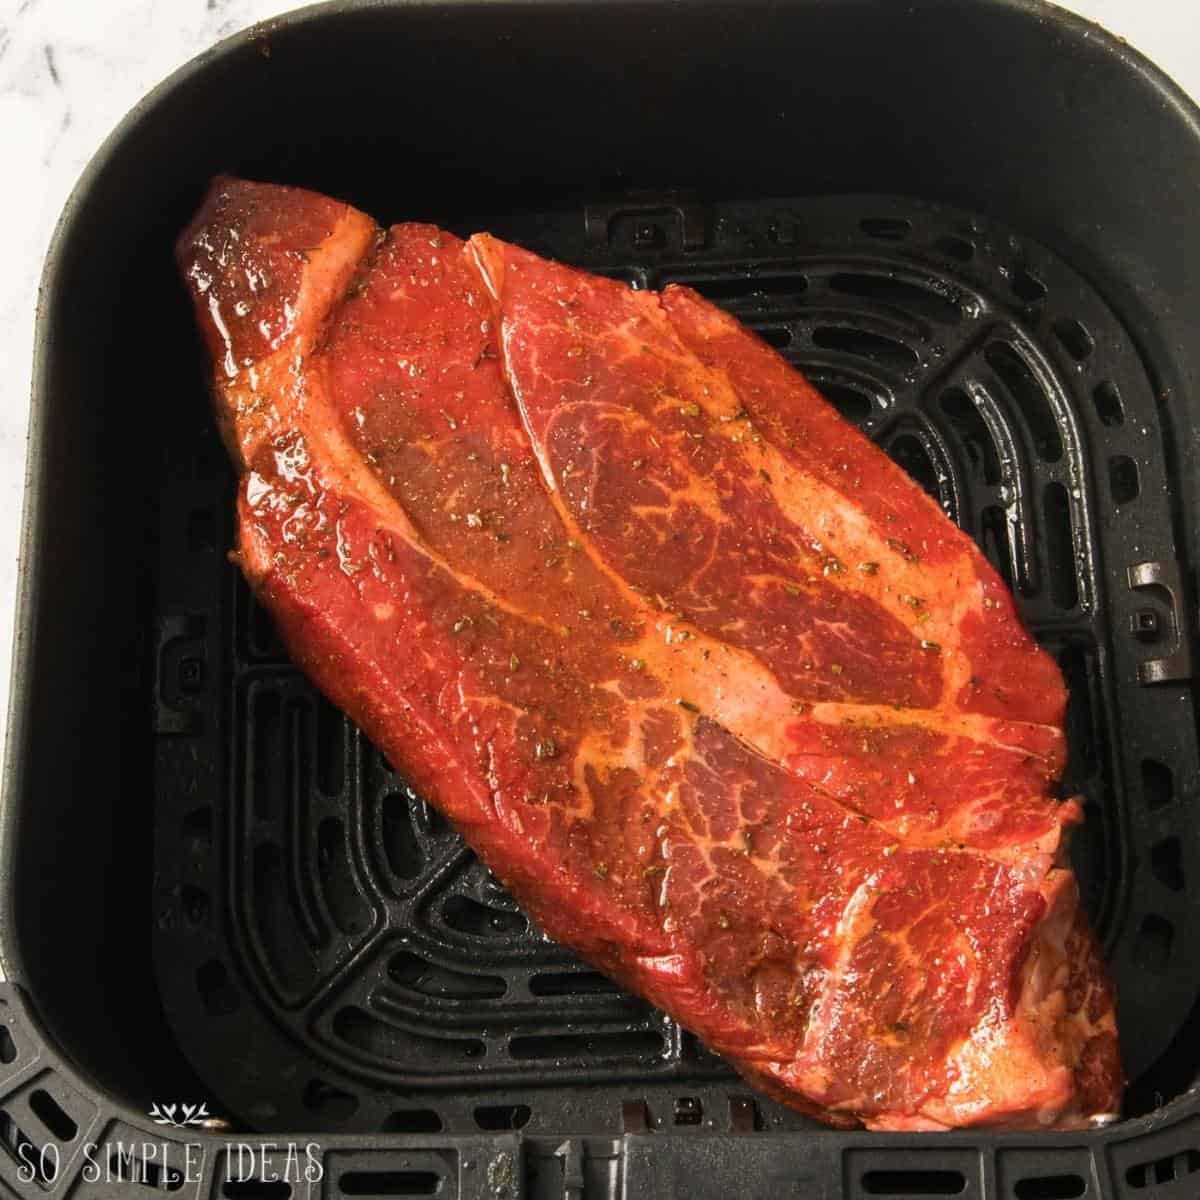 uncooked roast beef in air fryer basket.